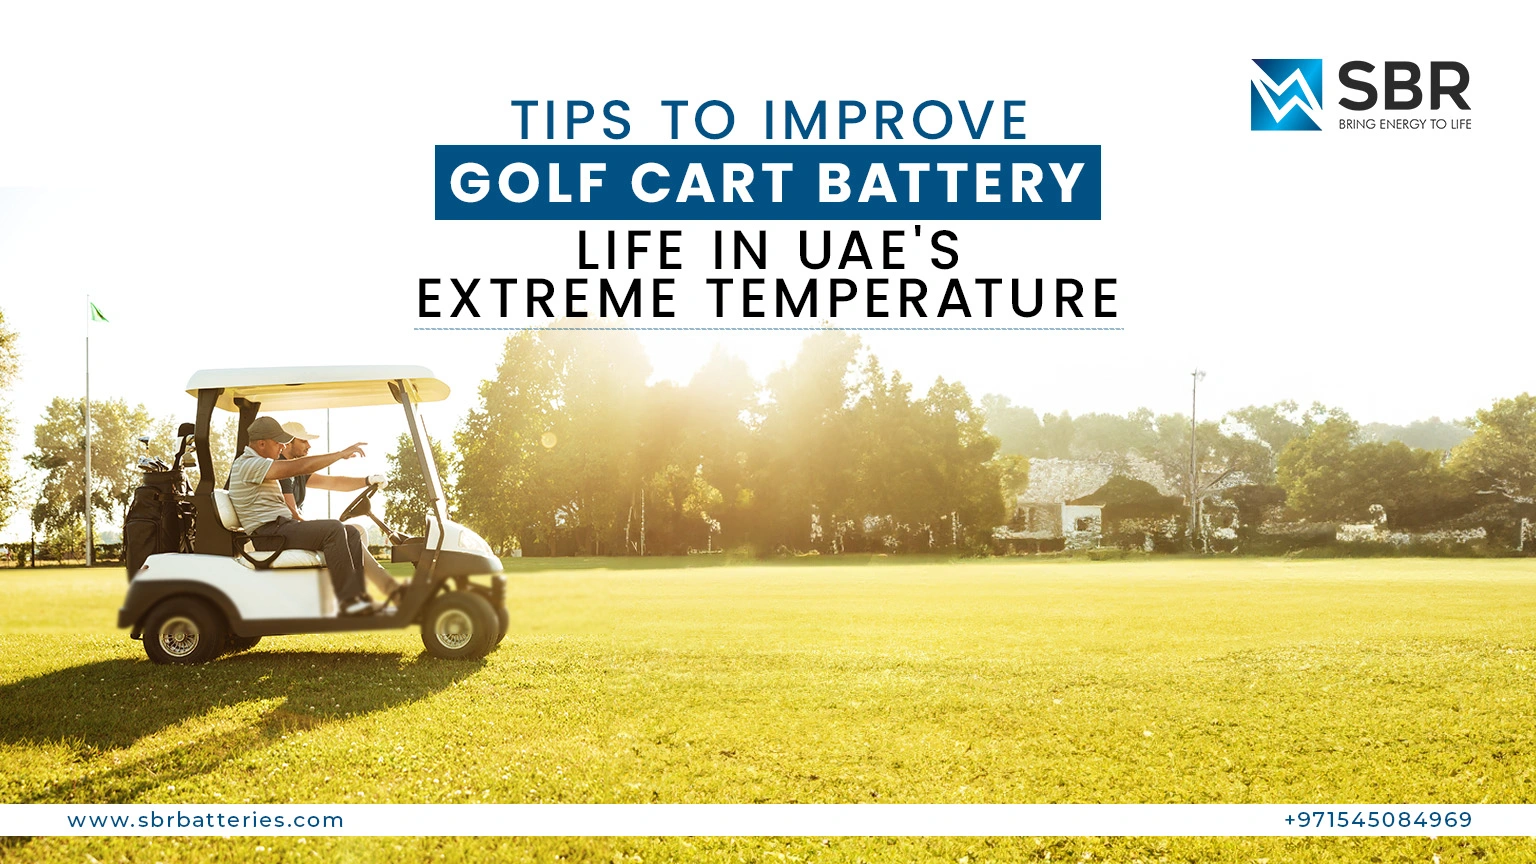 Golf cart battery in UAE